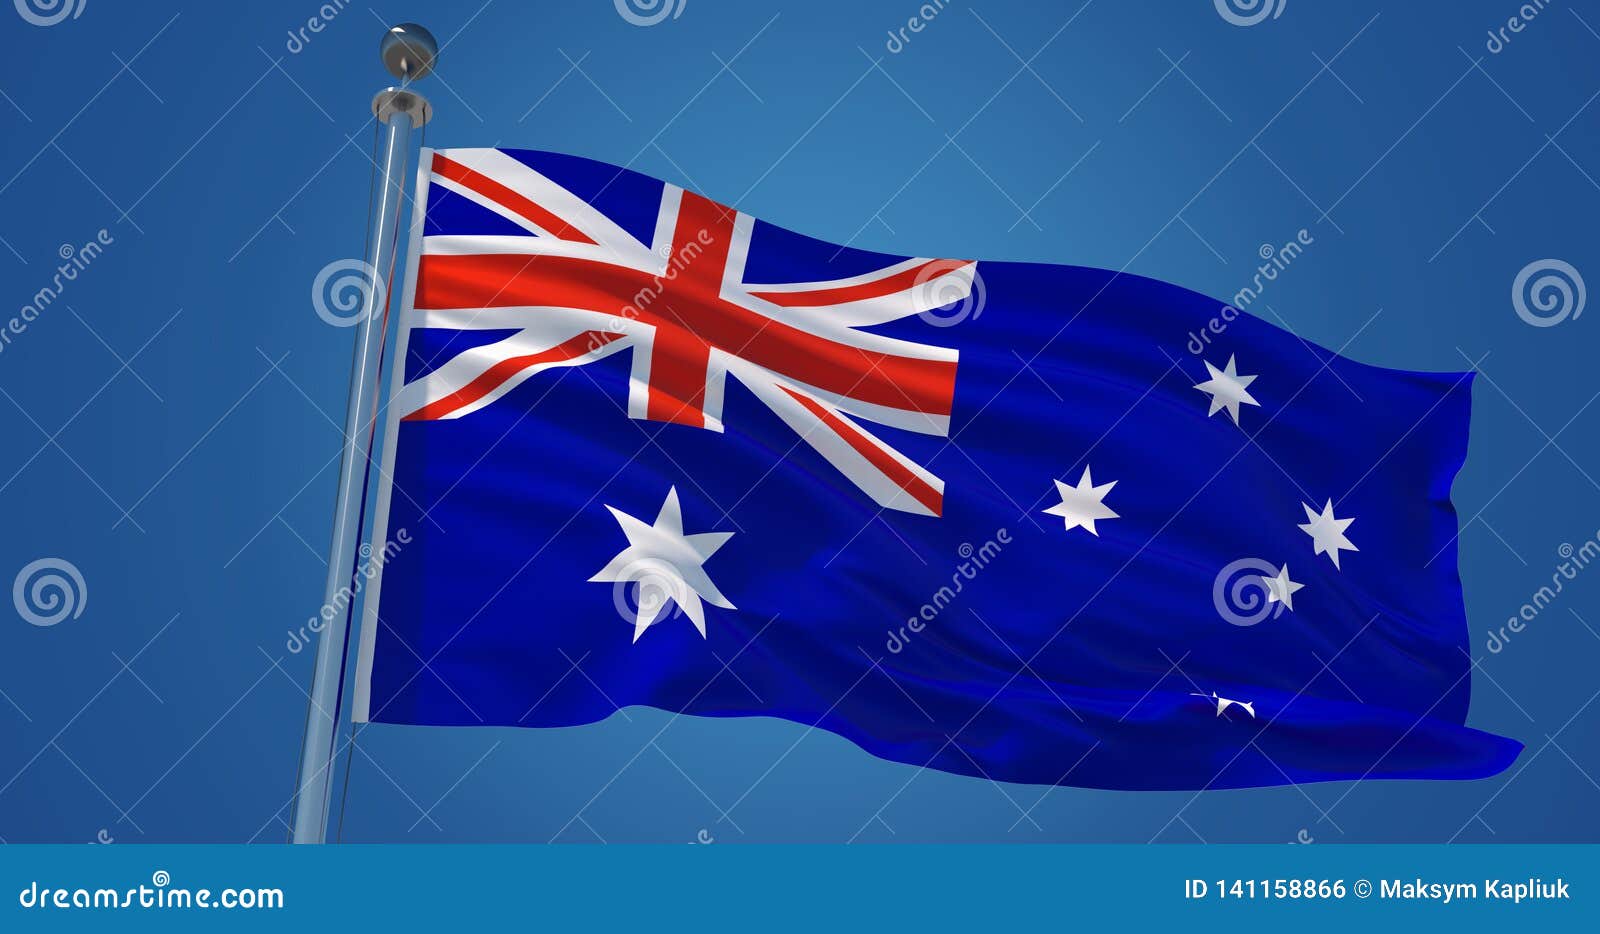 Flag in the Wind, 3d Illustration Stock Photo - Illustration of australian, fabric: 141158866